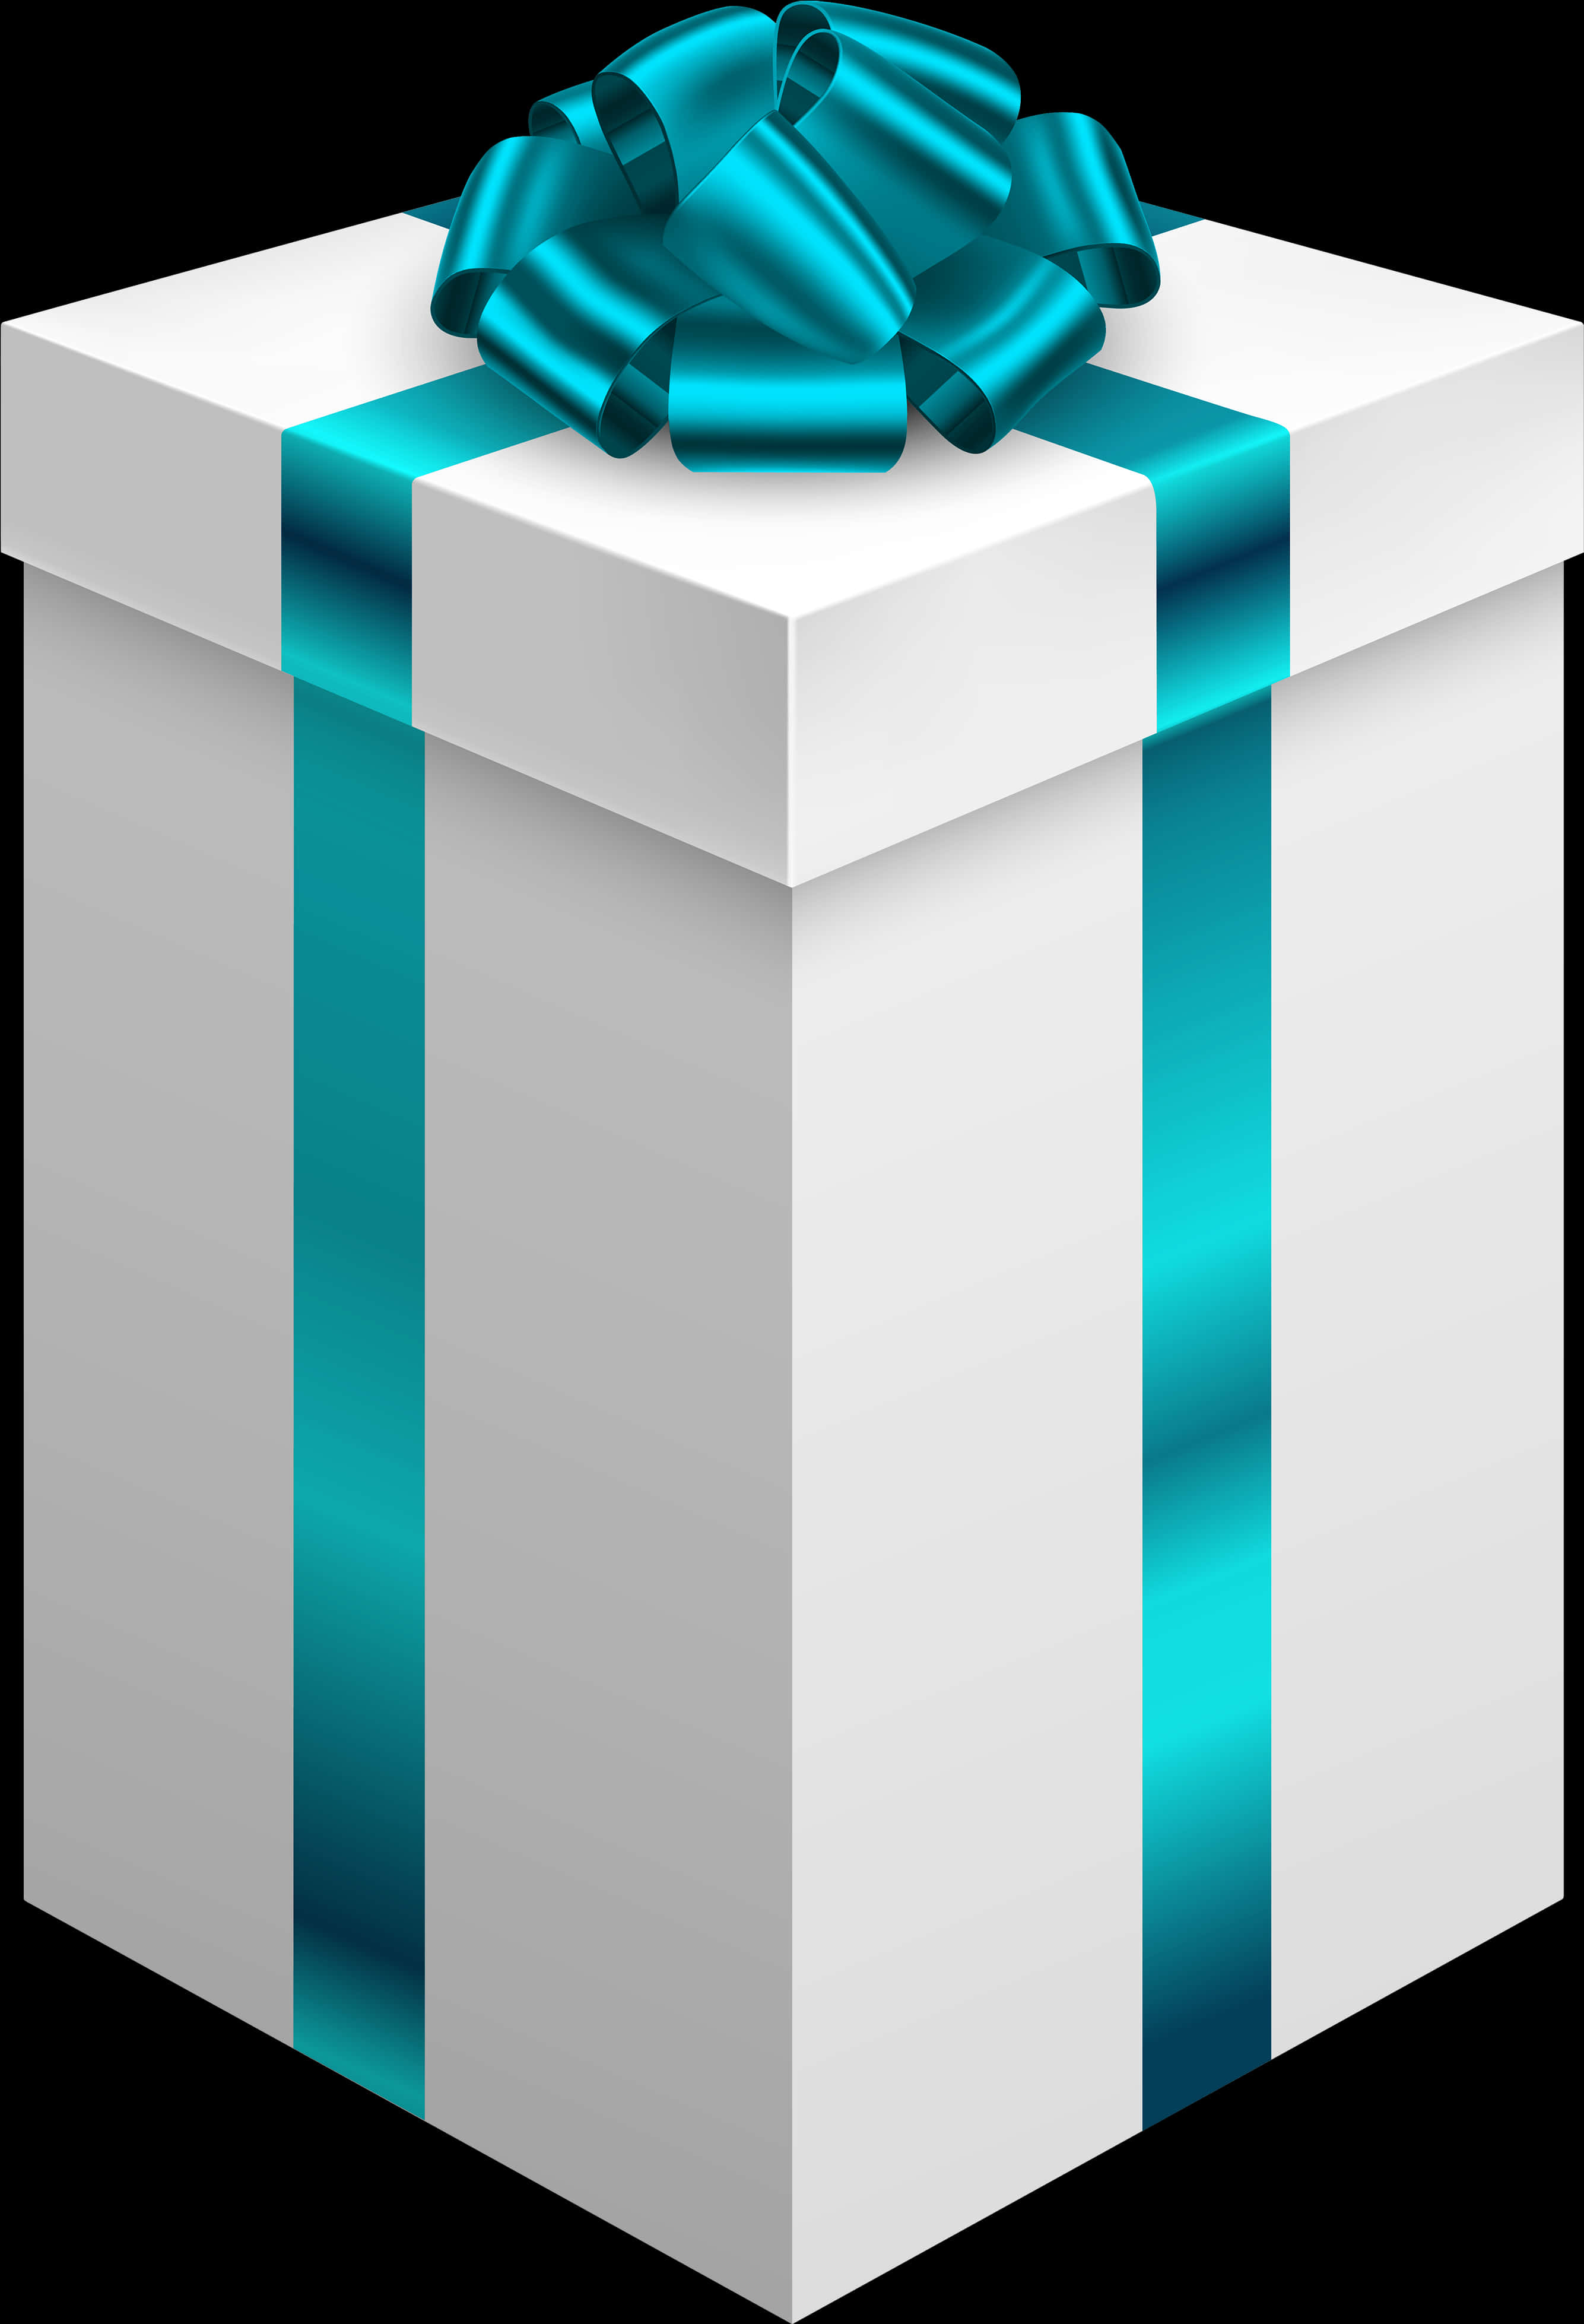 A White Box With A Blue Ribbon